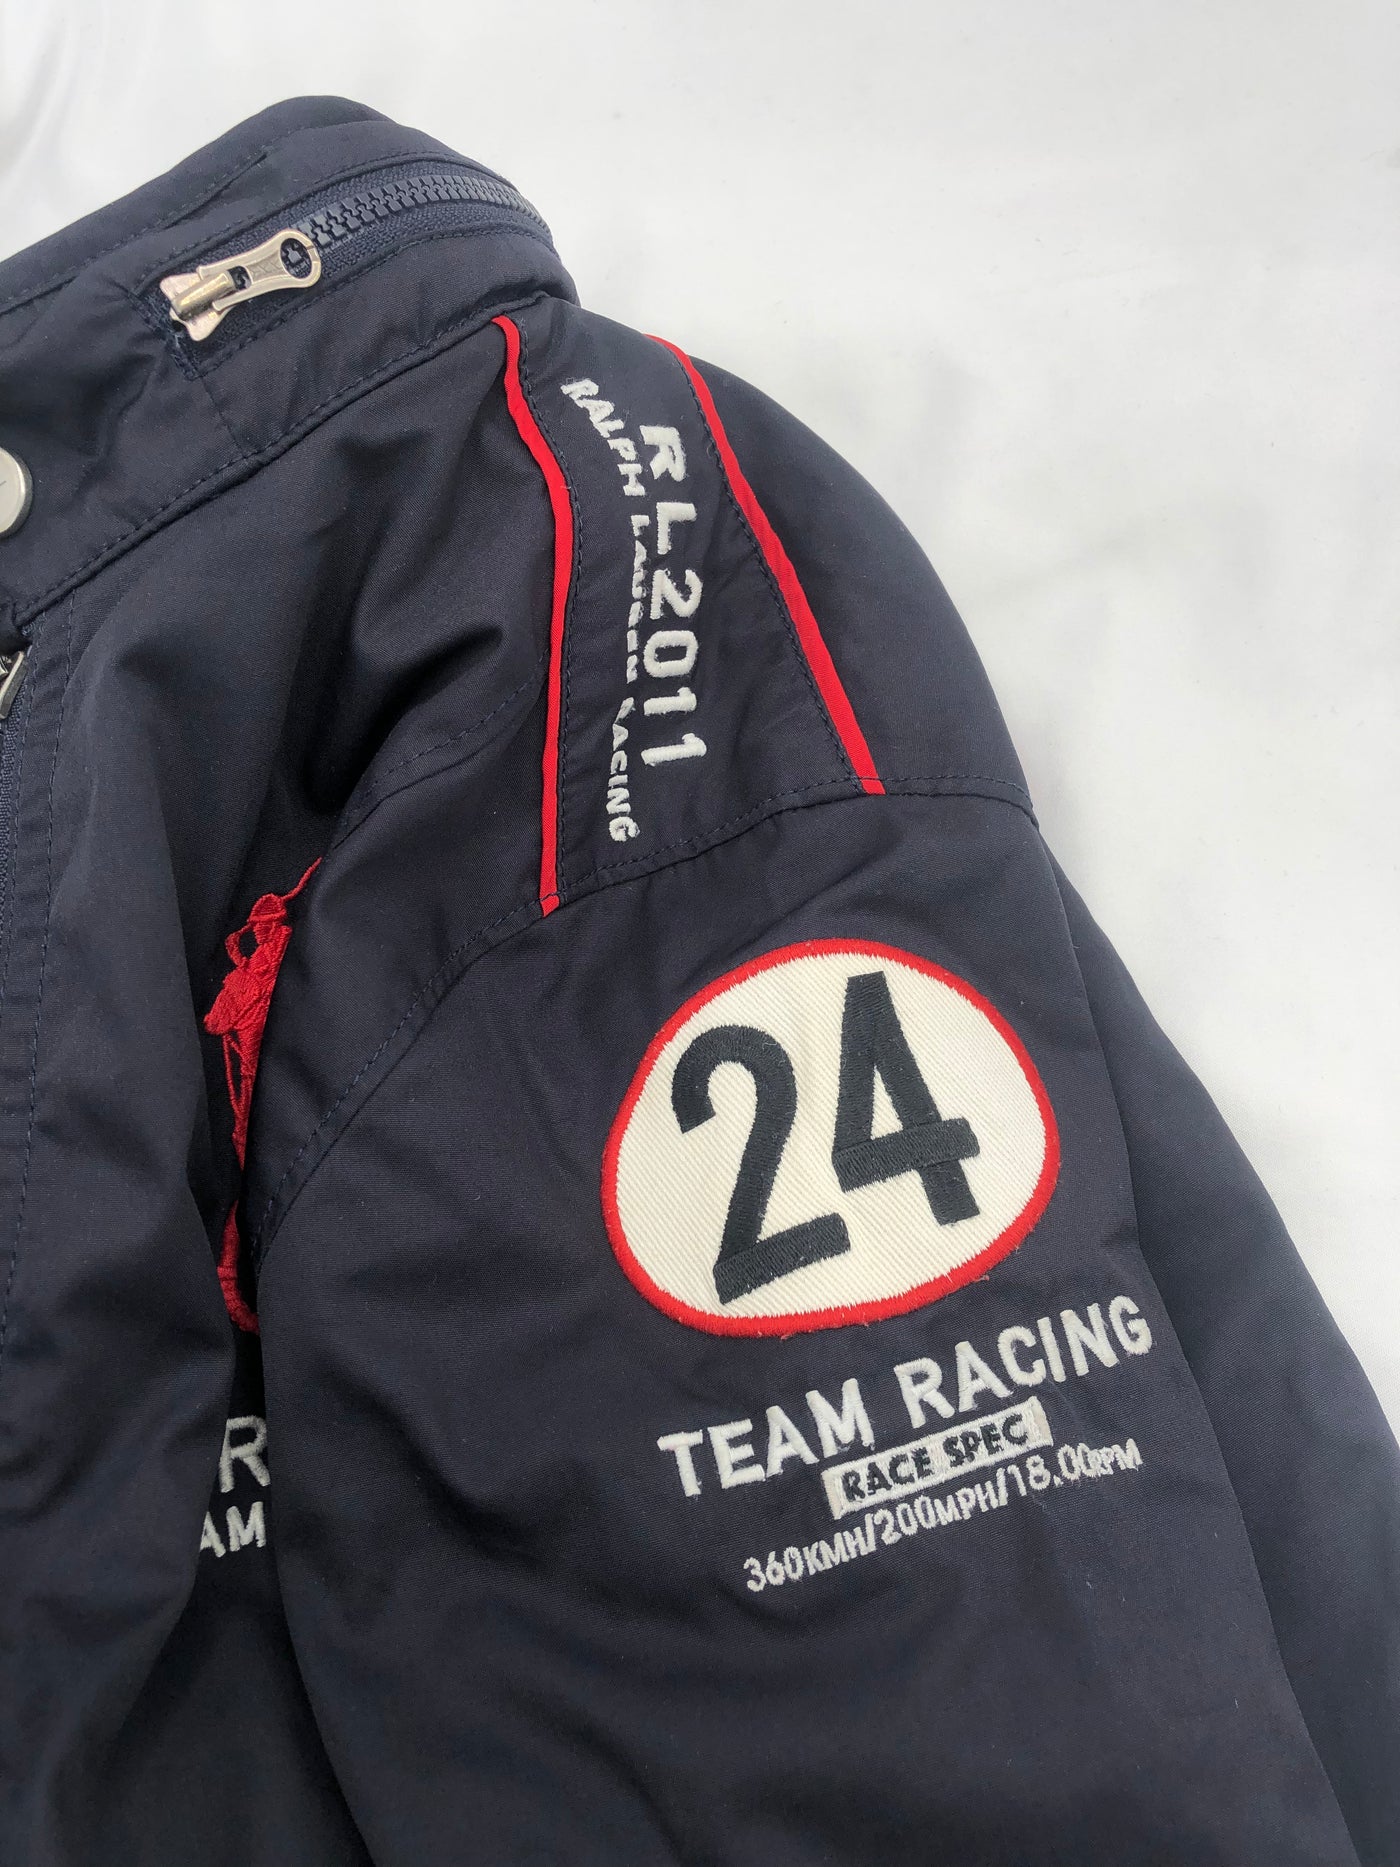 RALPH LAUREN Racing jacket size 6yrs